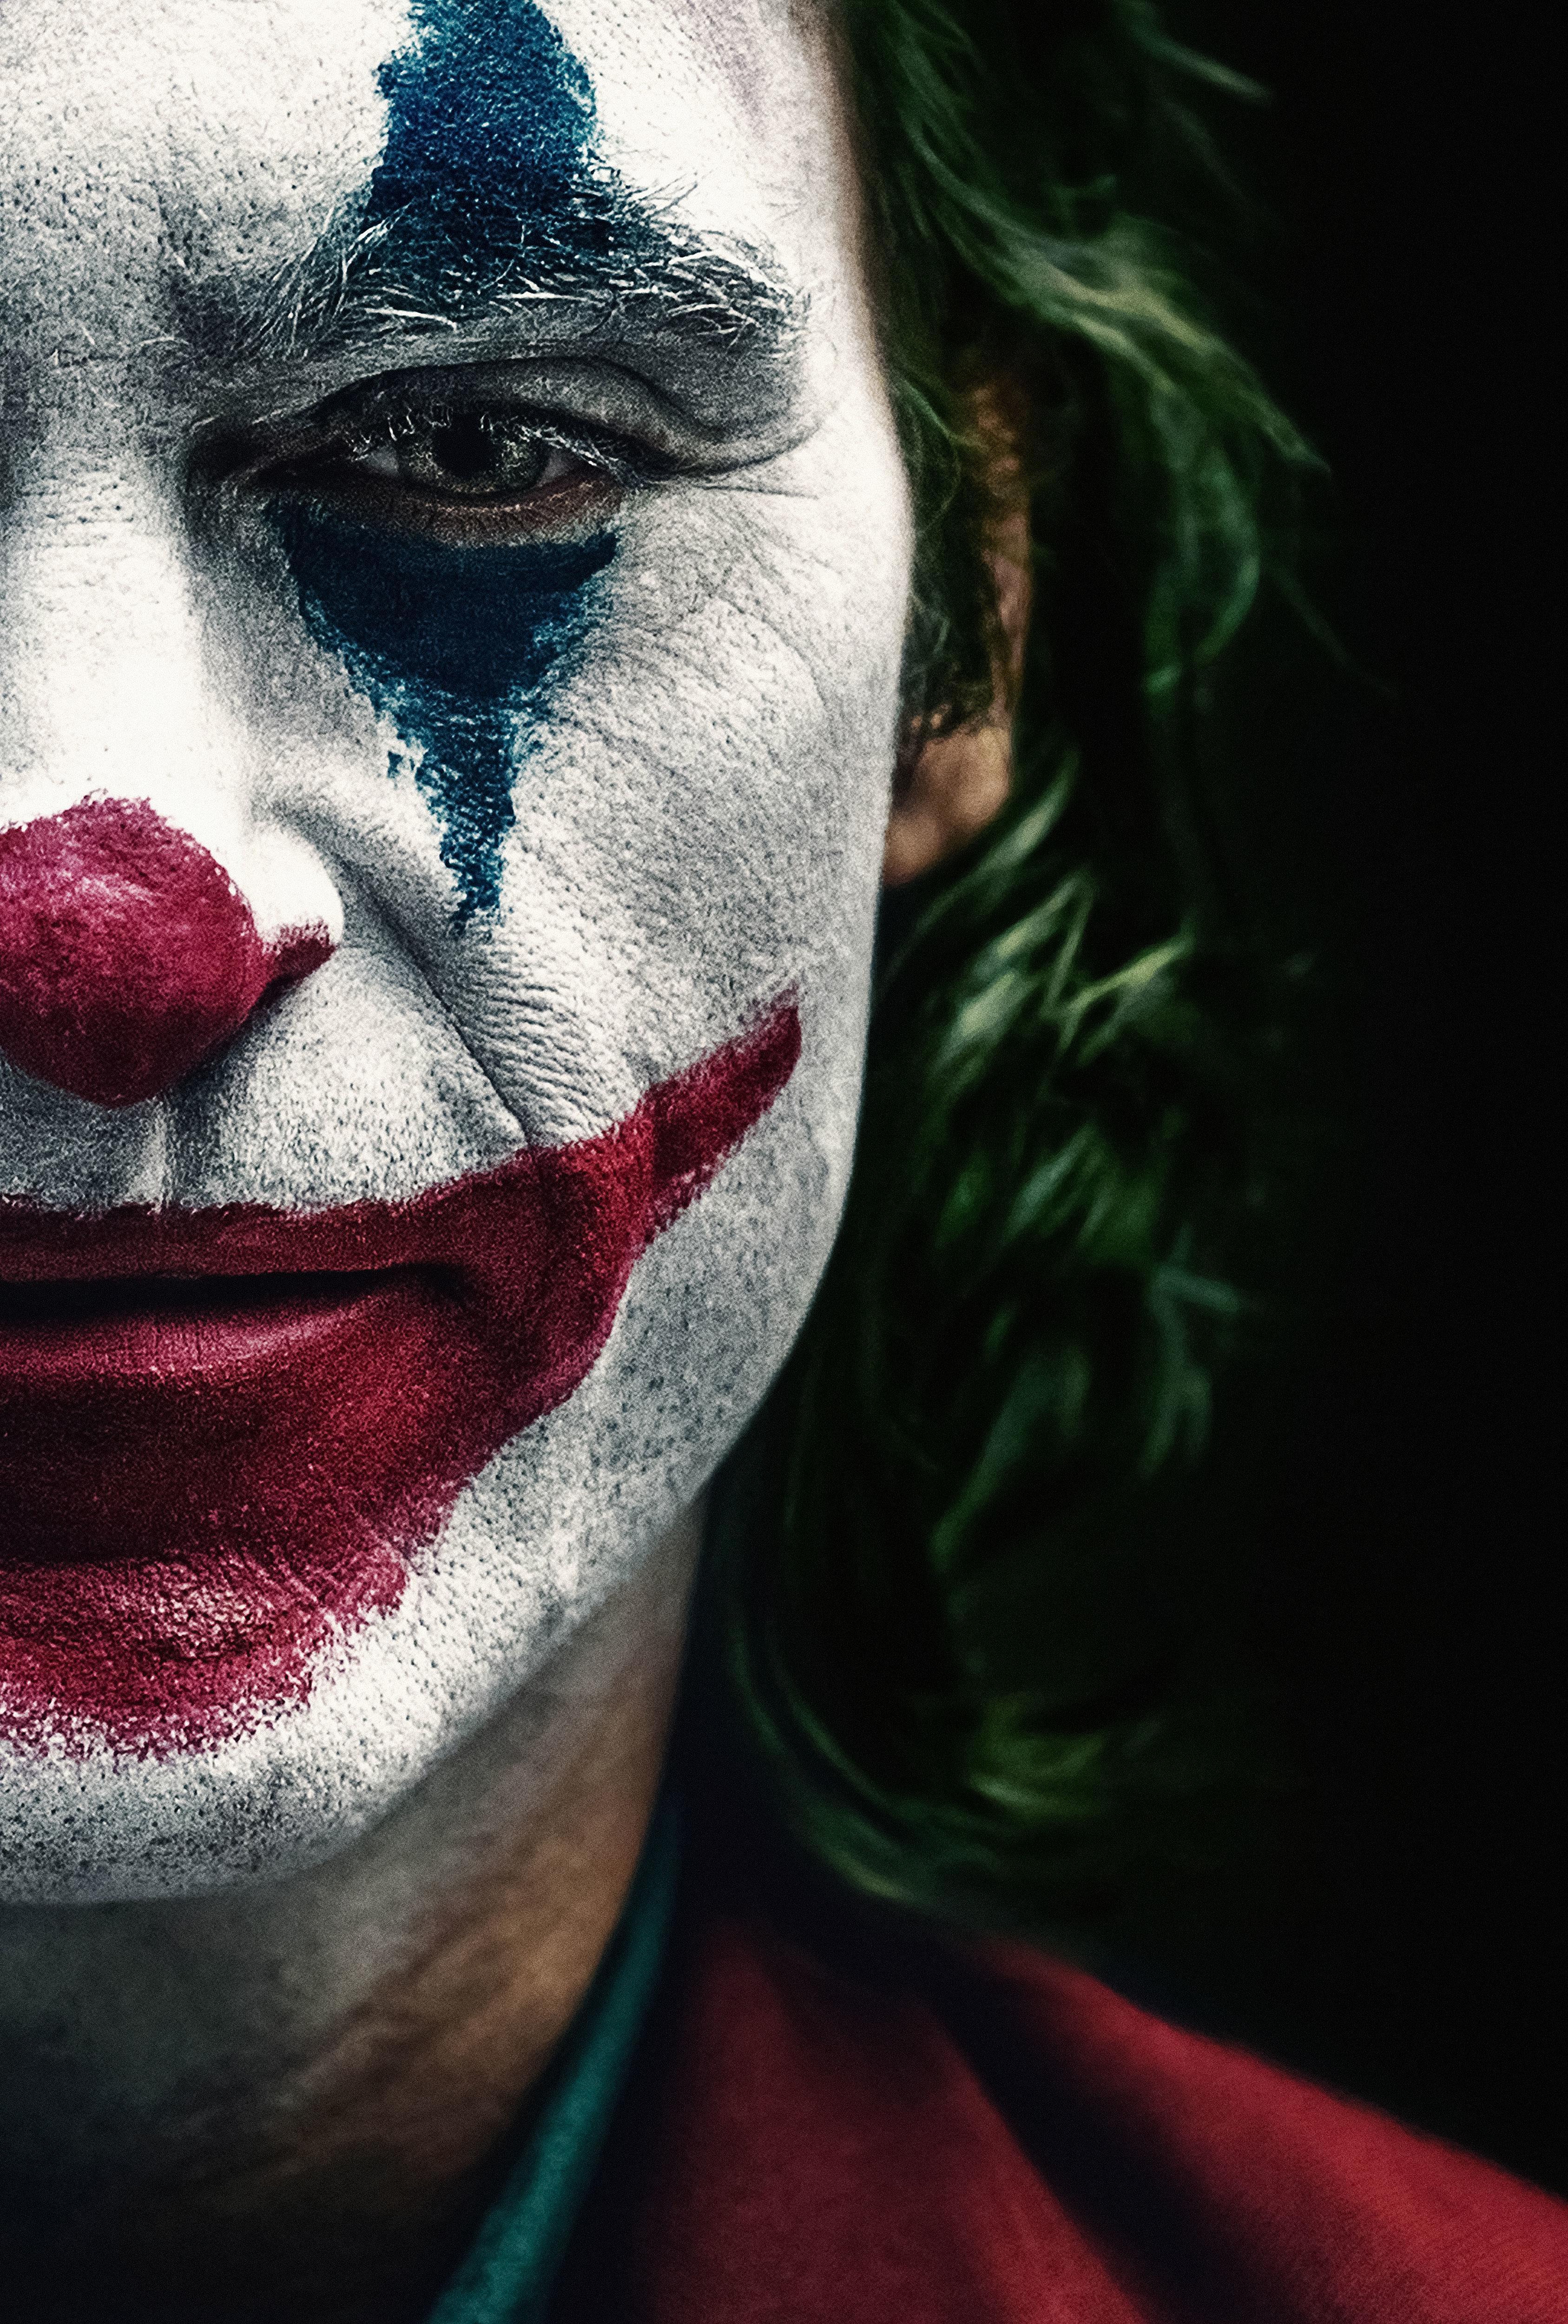 Joker 2019 Wallpaper, HD Movies 4K Wallpaper, Image